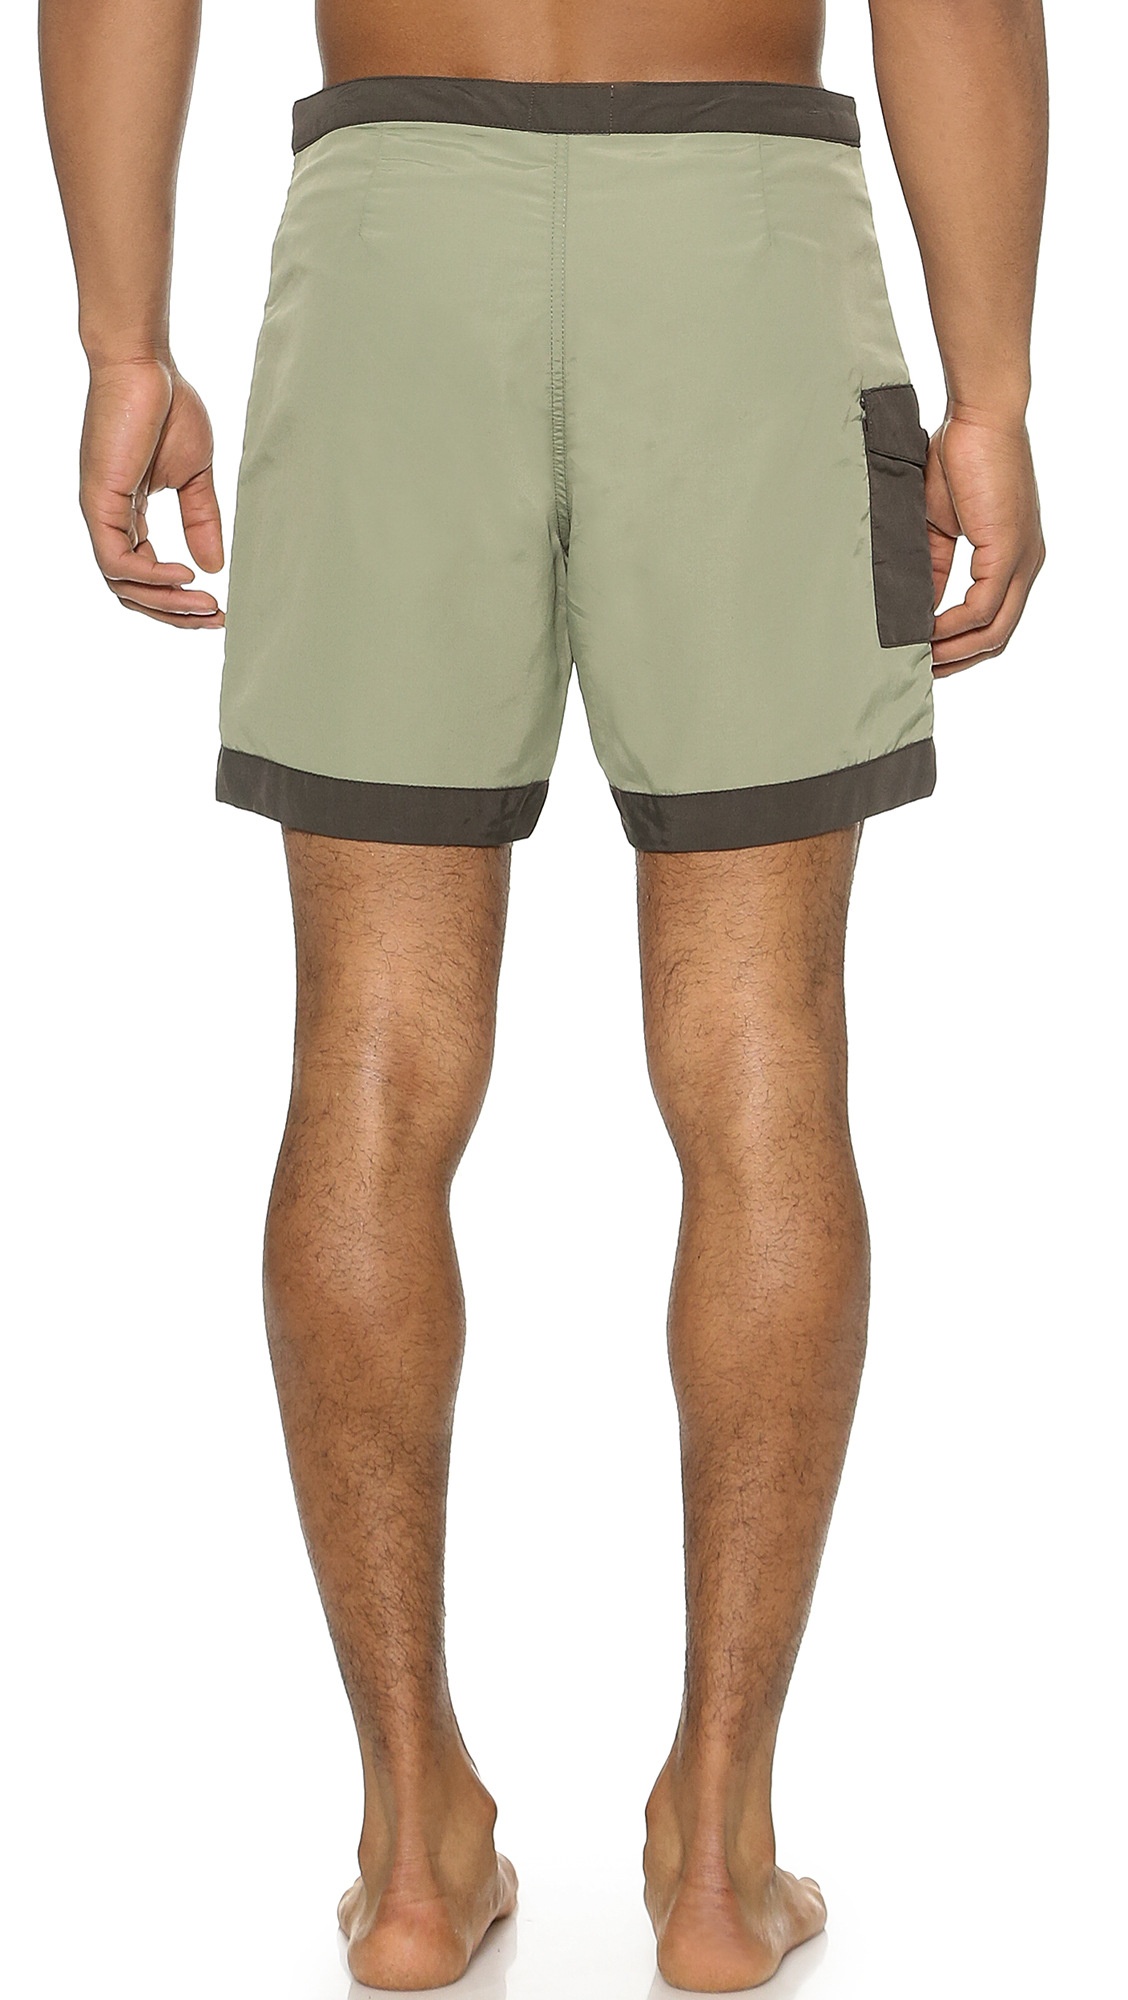 best board shorts for men